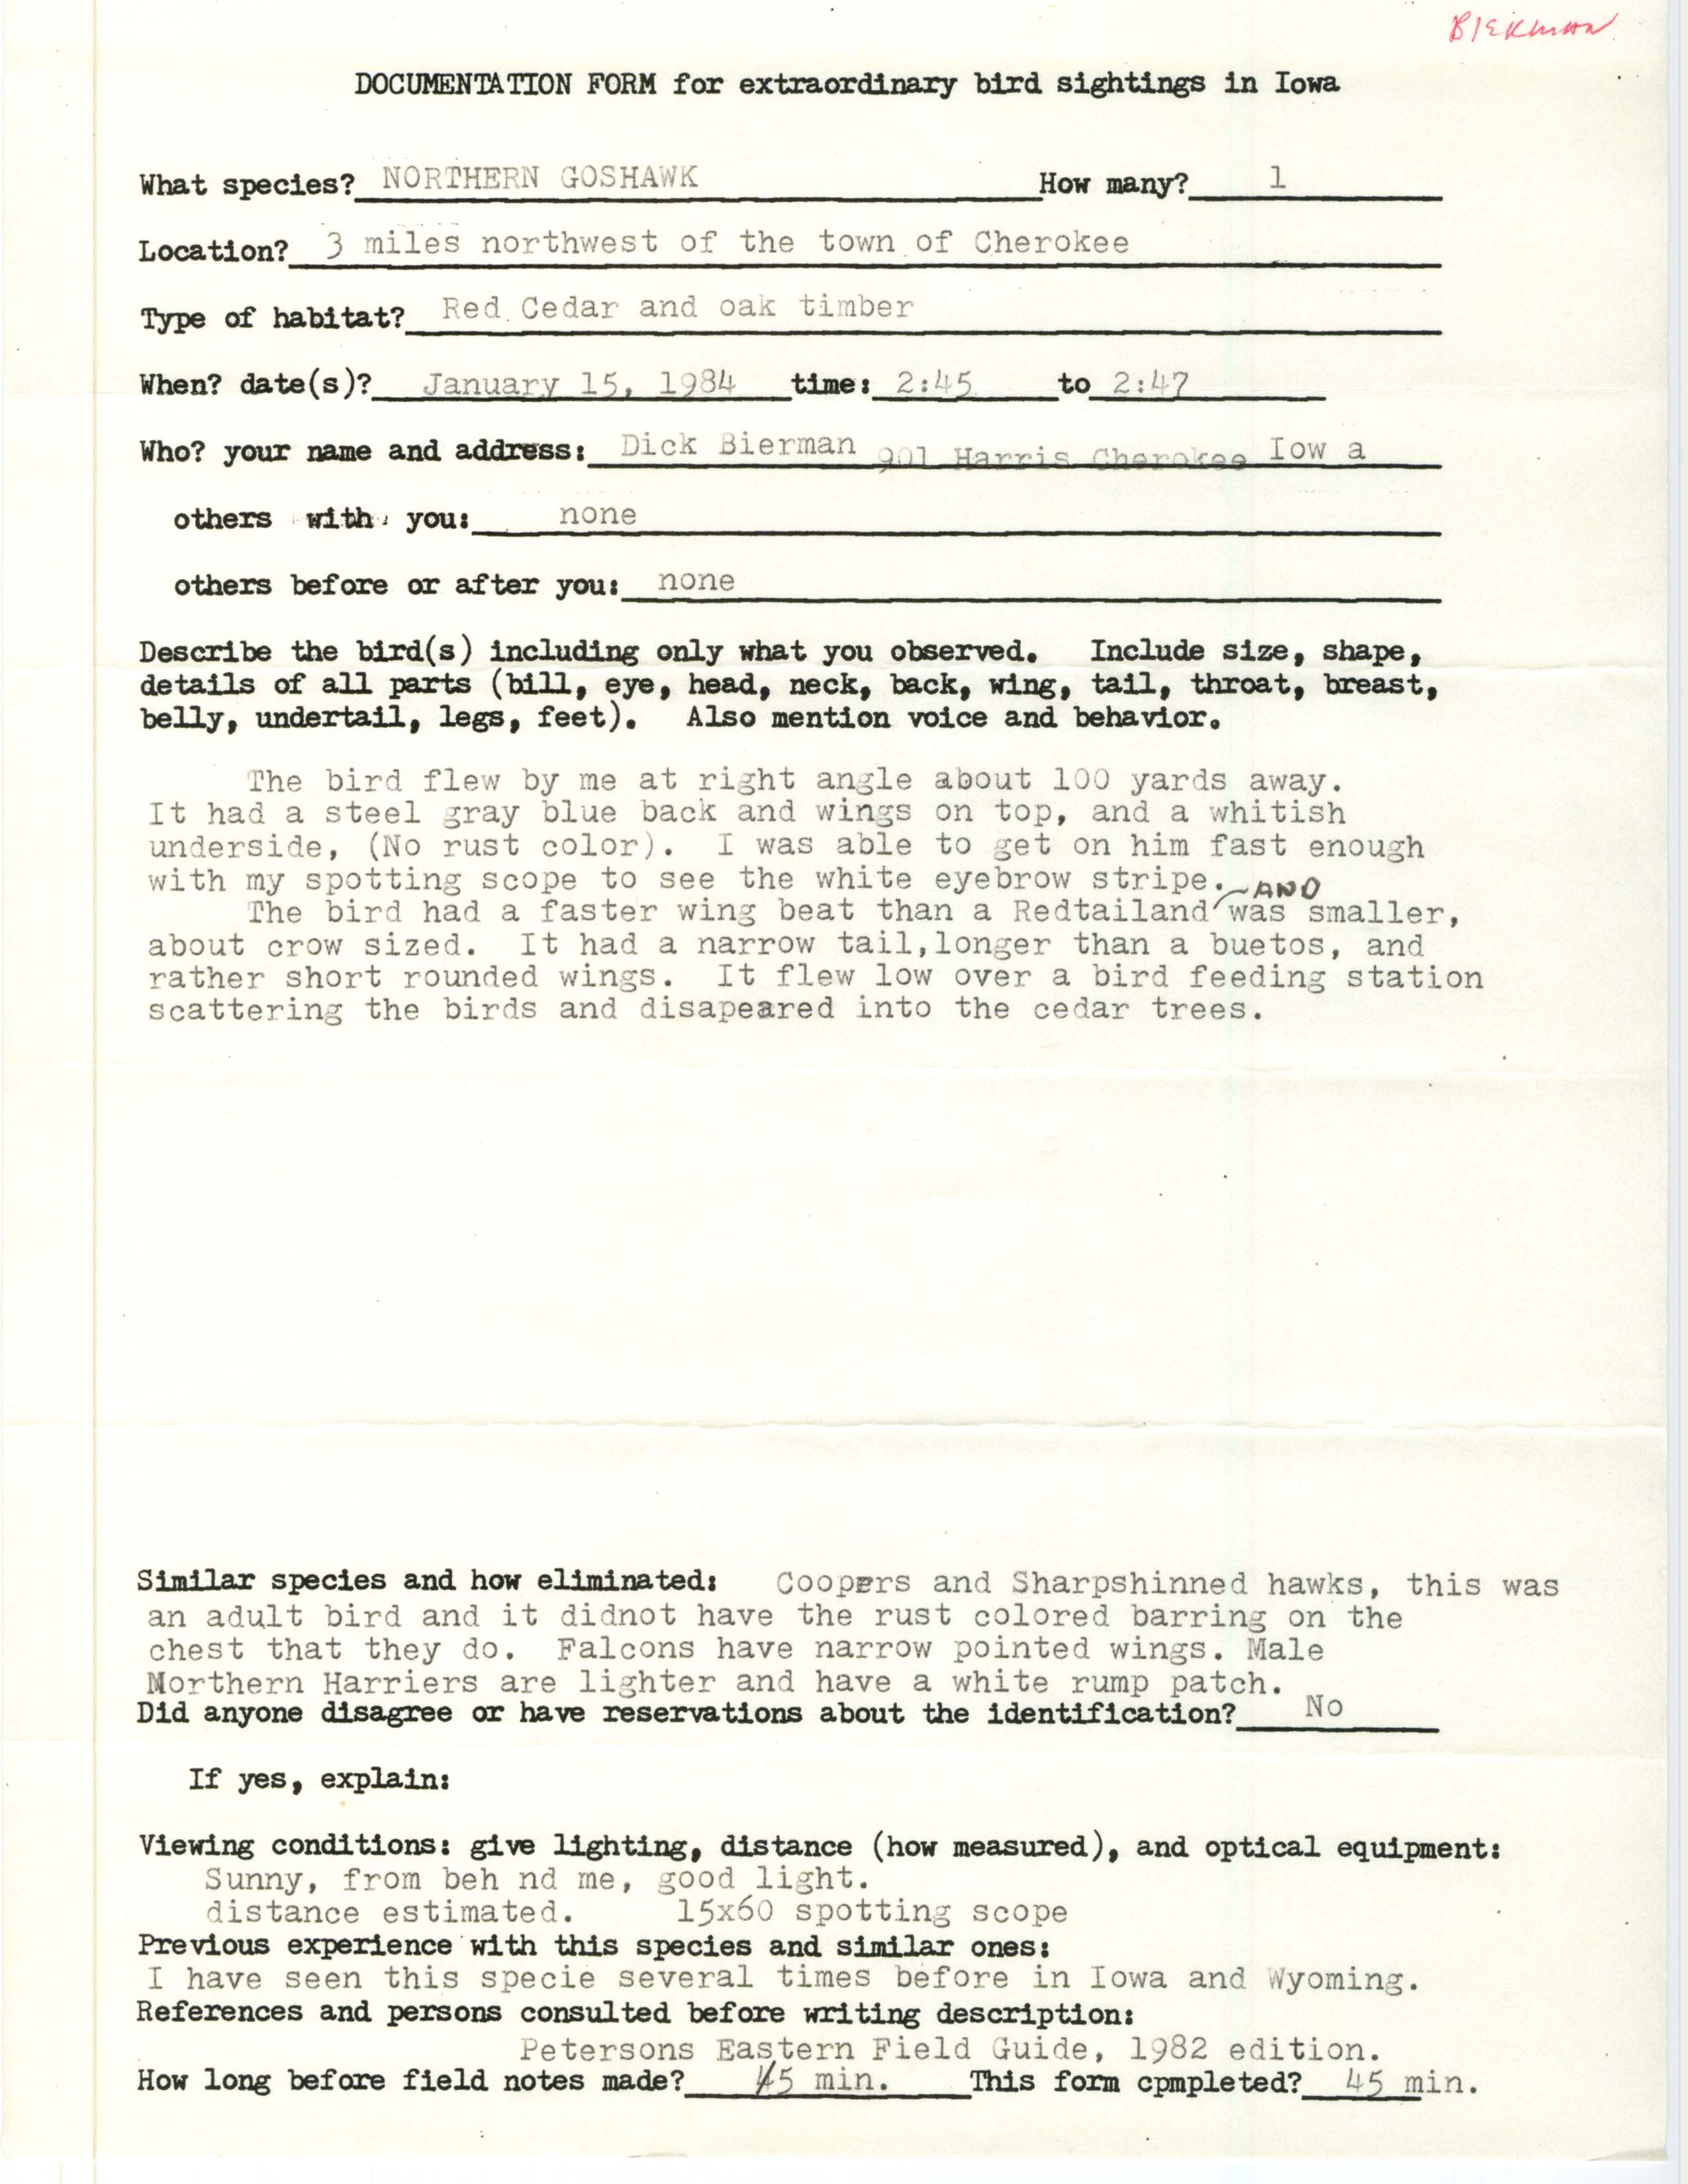 Rare bird documentation form for Northern Goshawk at Cherokee, 1984